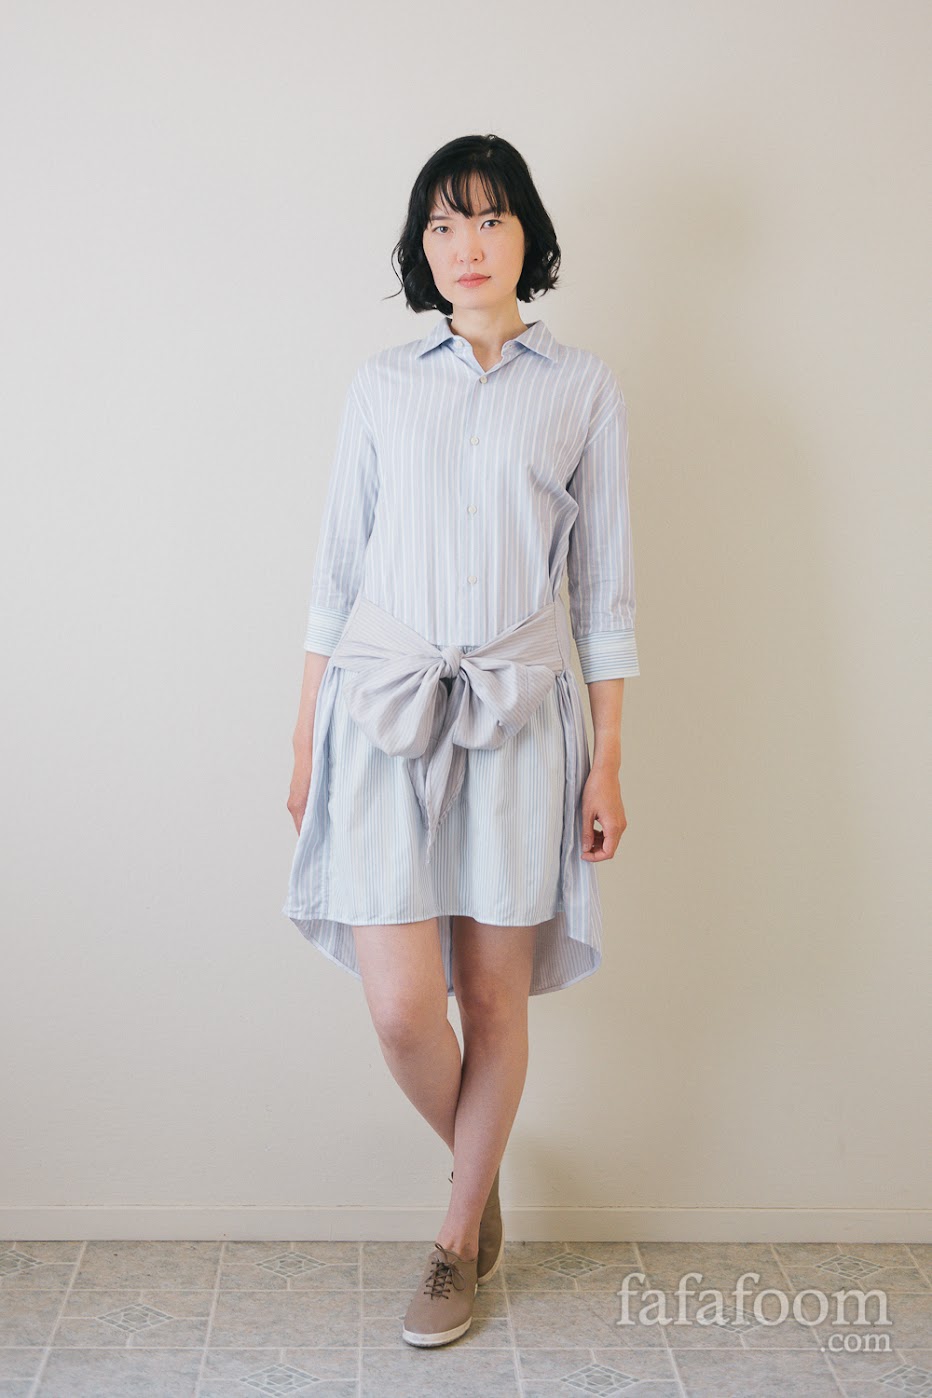 Styling: DIY Shirt Dress with Bow Waist Tie - DIY Fashion Garment | fafafoom.com